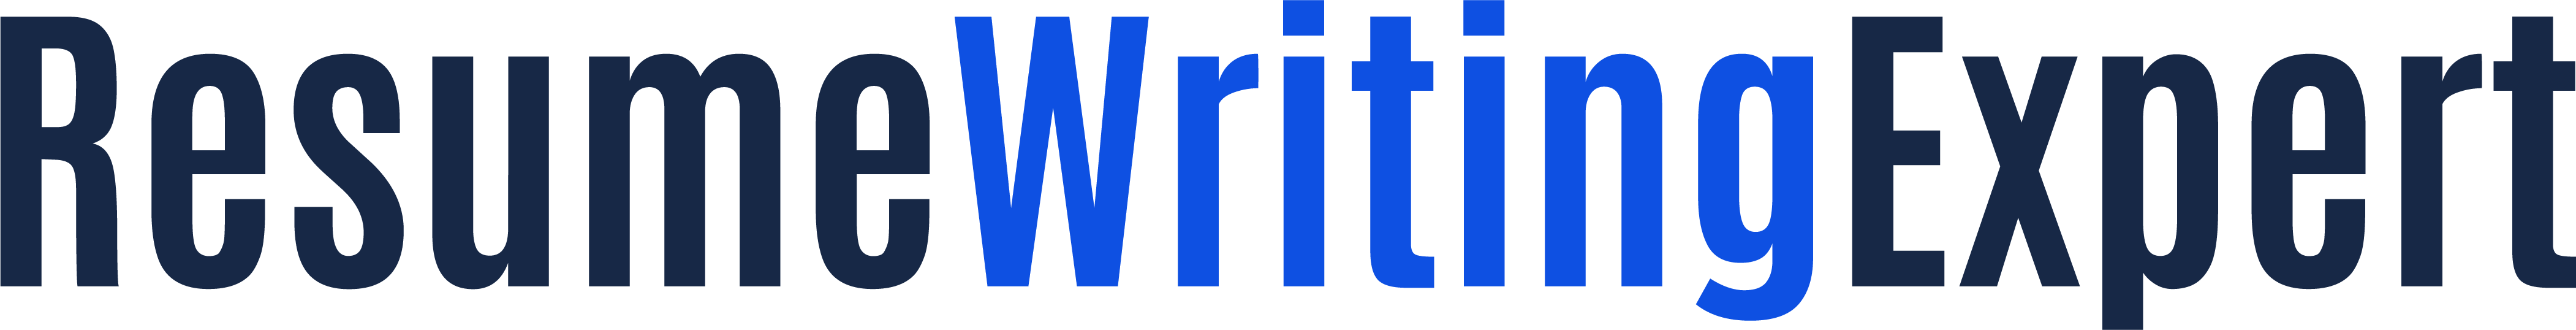 Resume Writing Group Logo